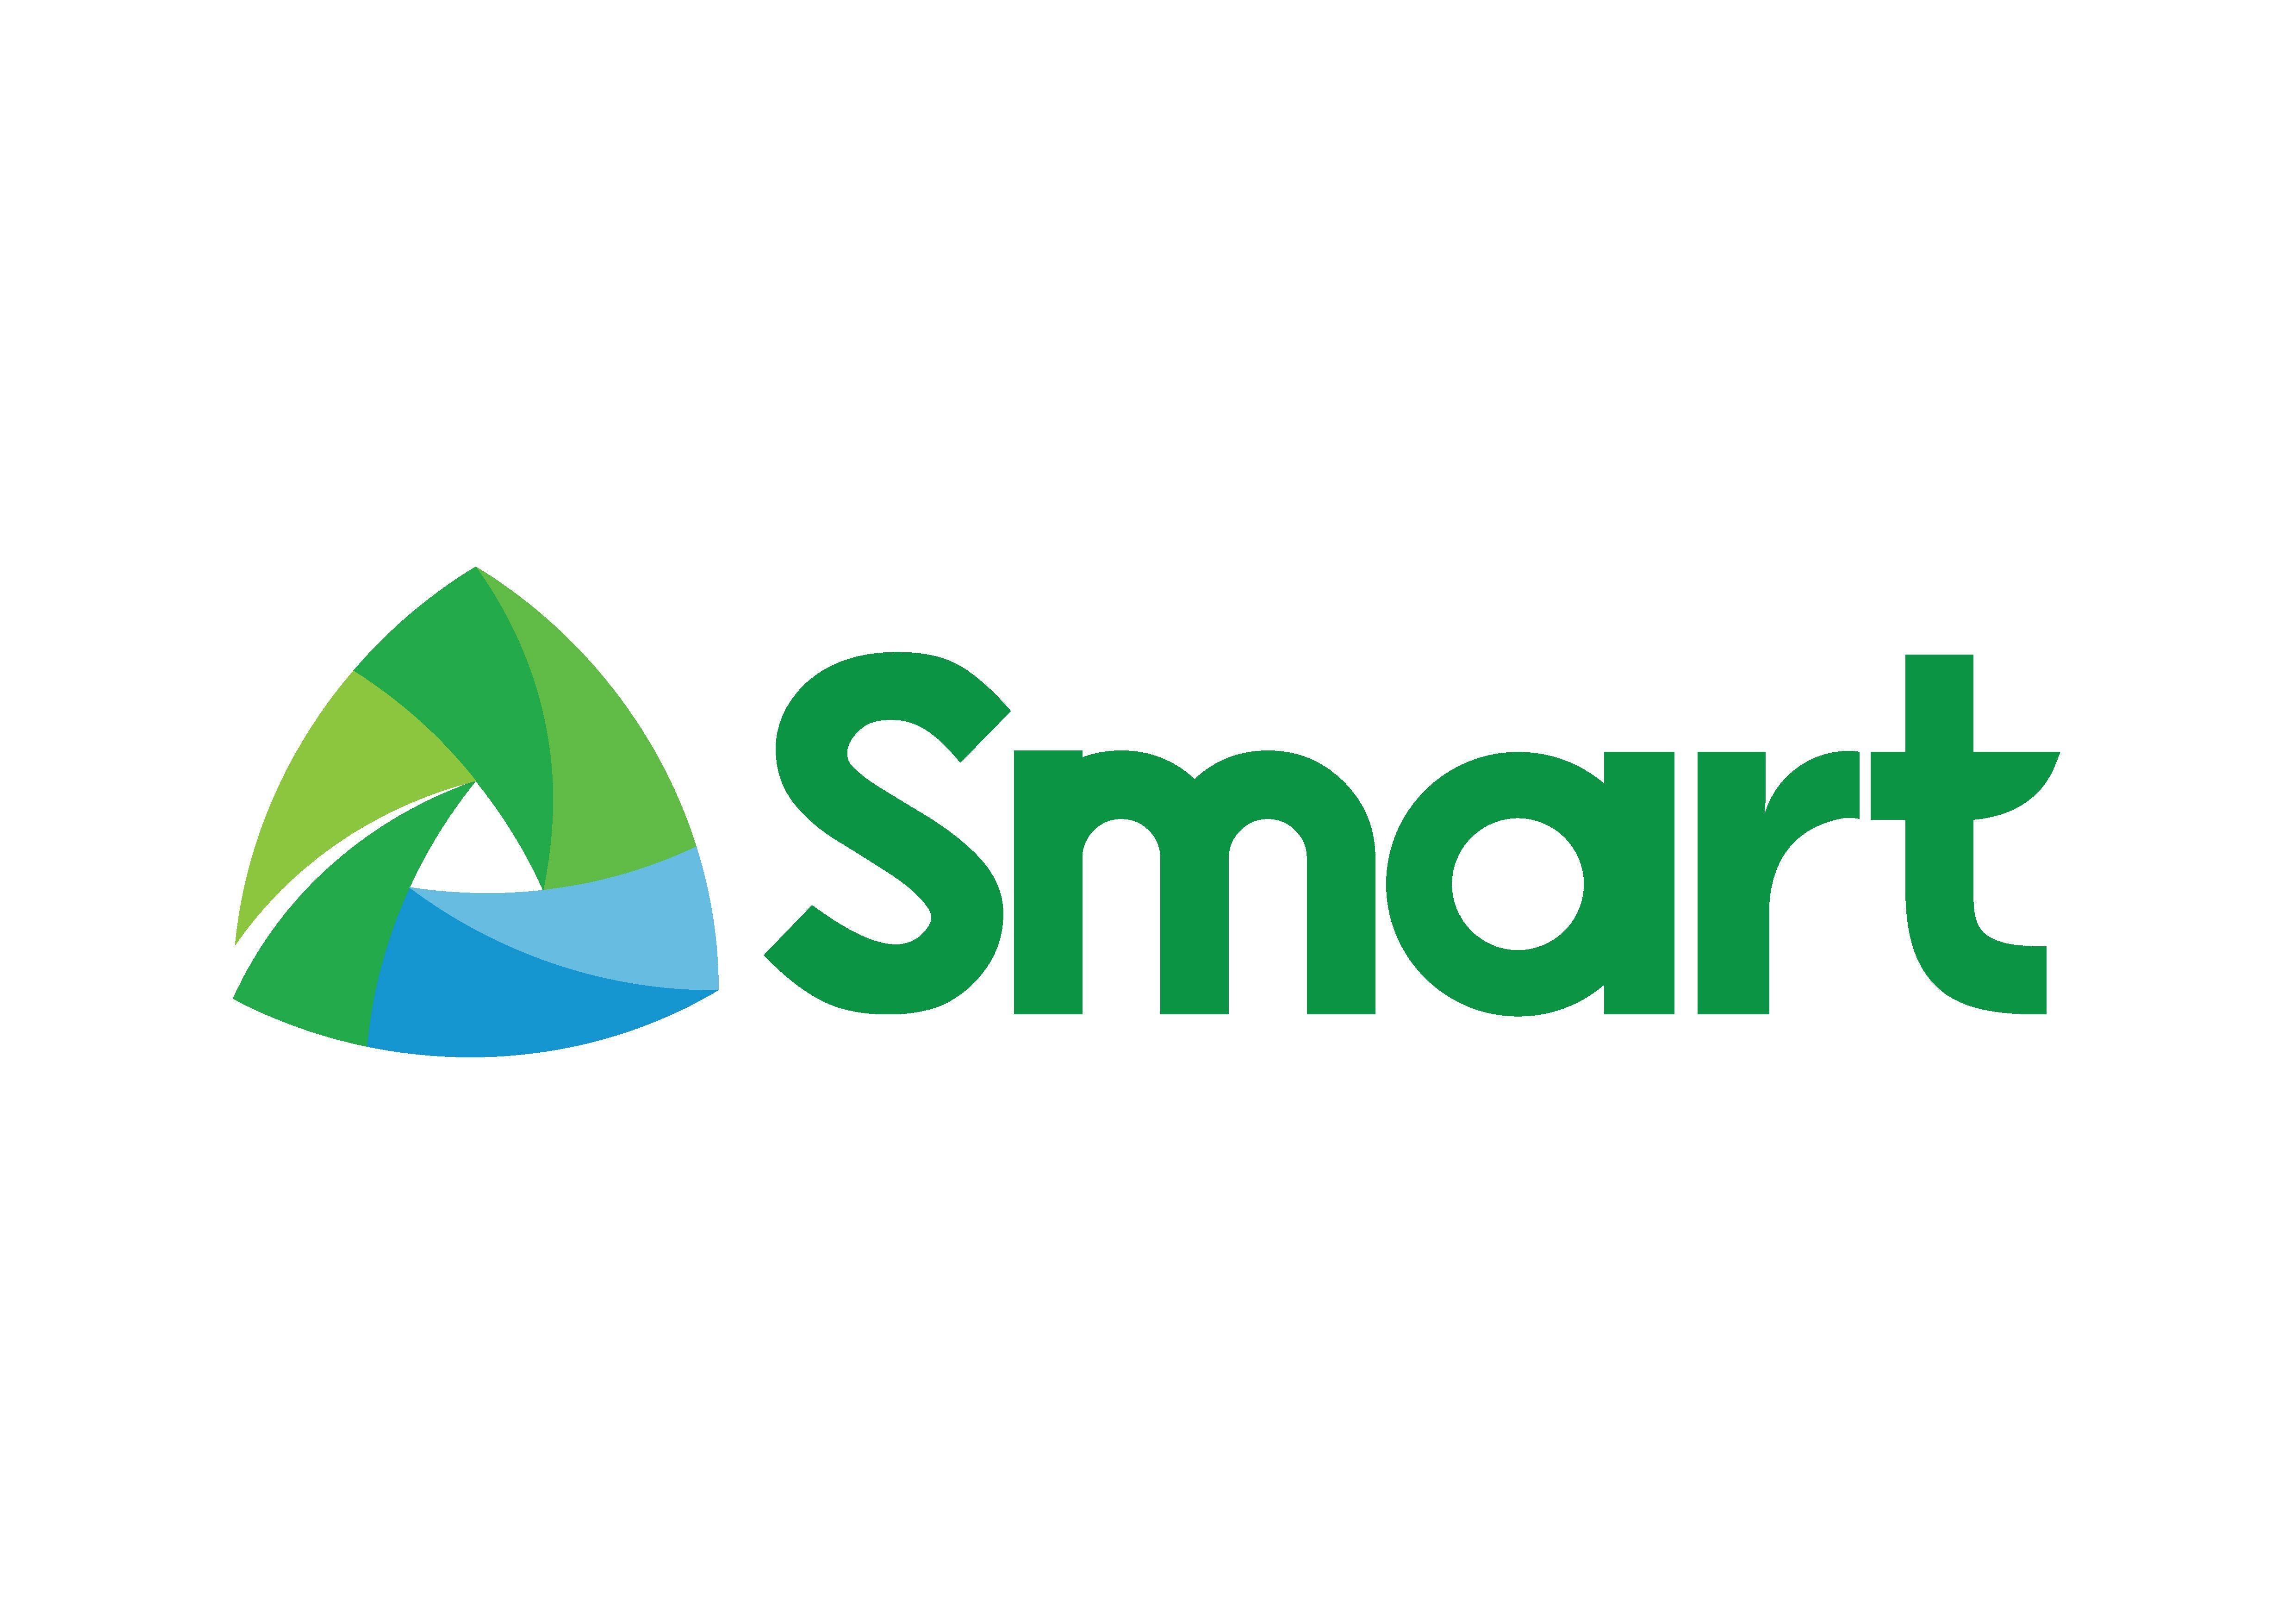 Filipino Company Logo - PLDT, Smart unveil new logo in line with 'digital pivot'